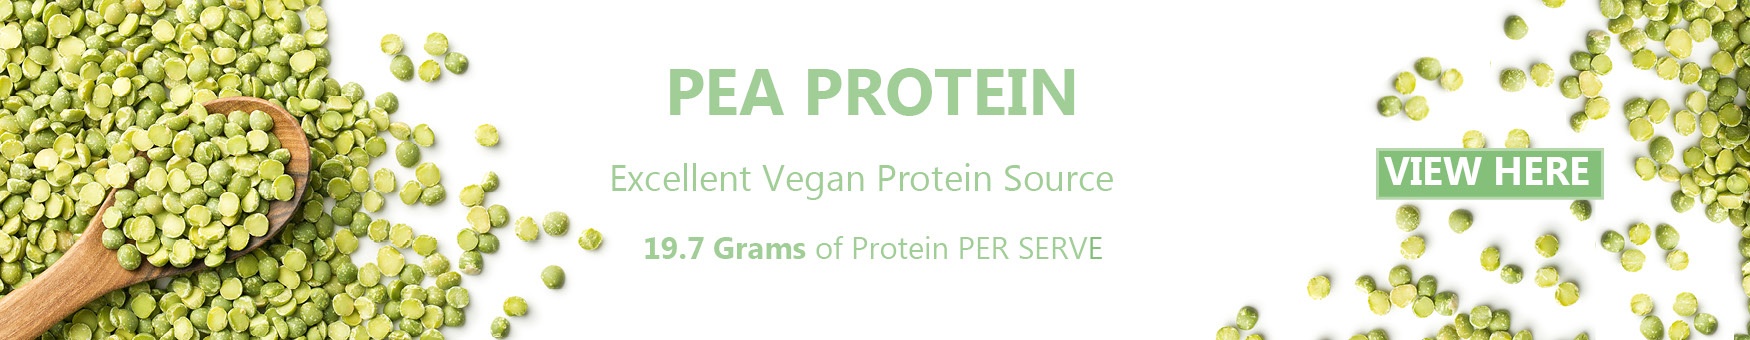 pea protein banner (002).jpg